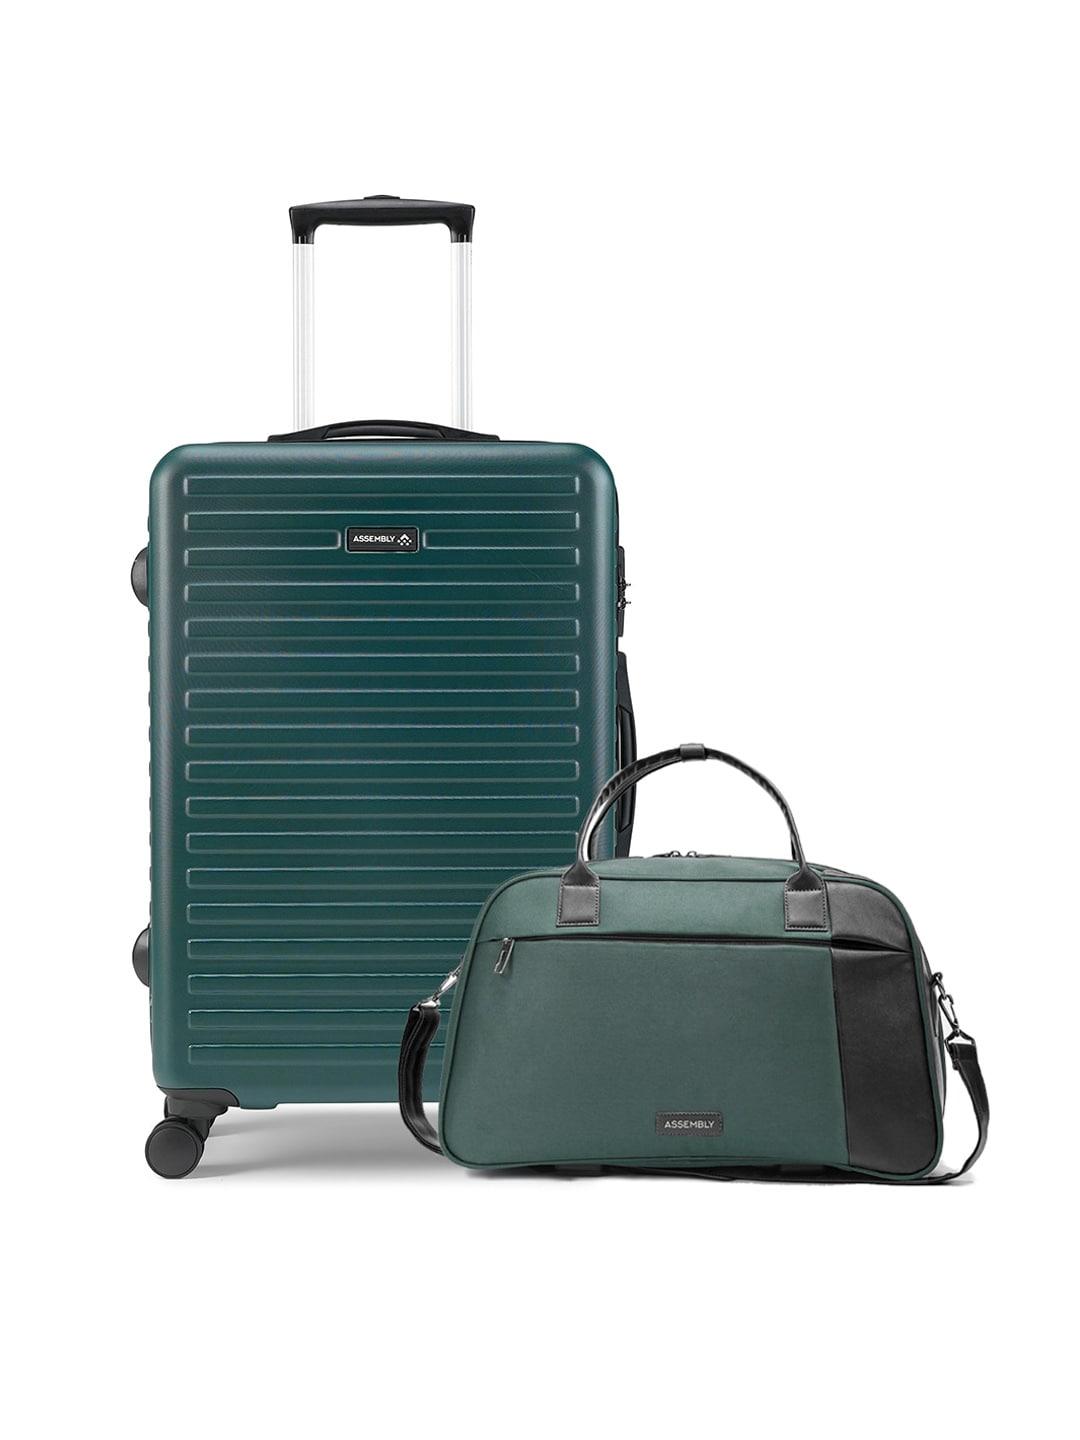 assembly set of 2 medium checkin 24-inch hard trolley luggage & weekender duffle bag 38l